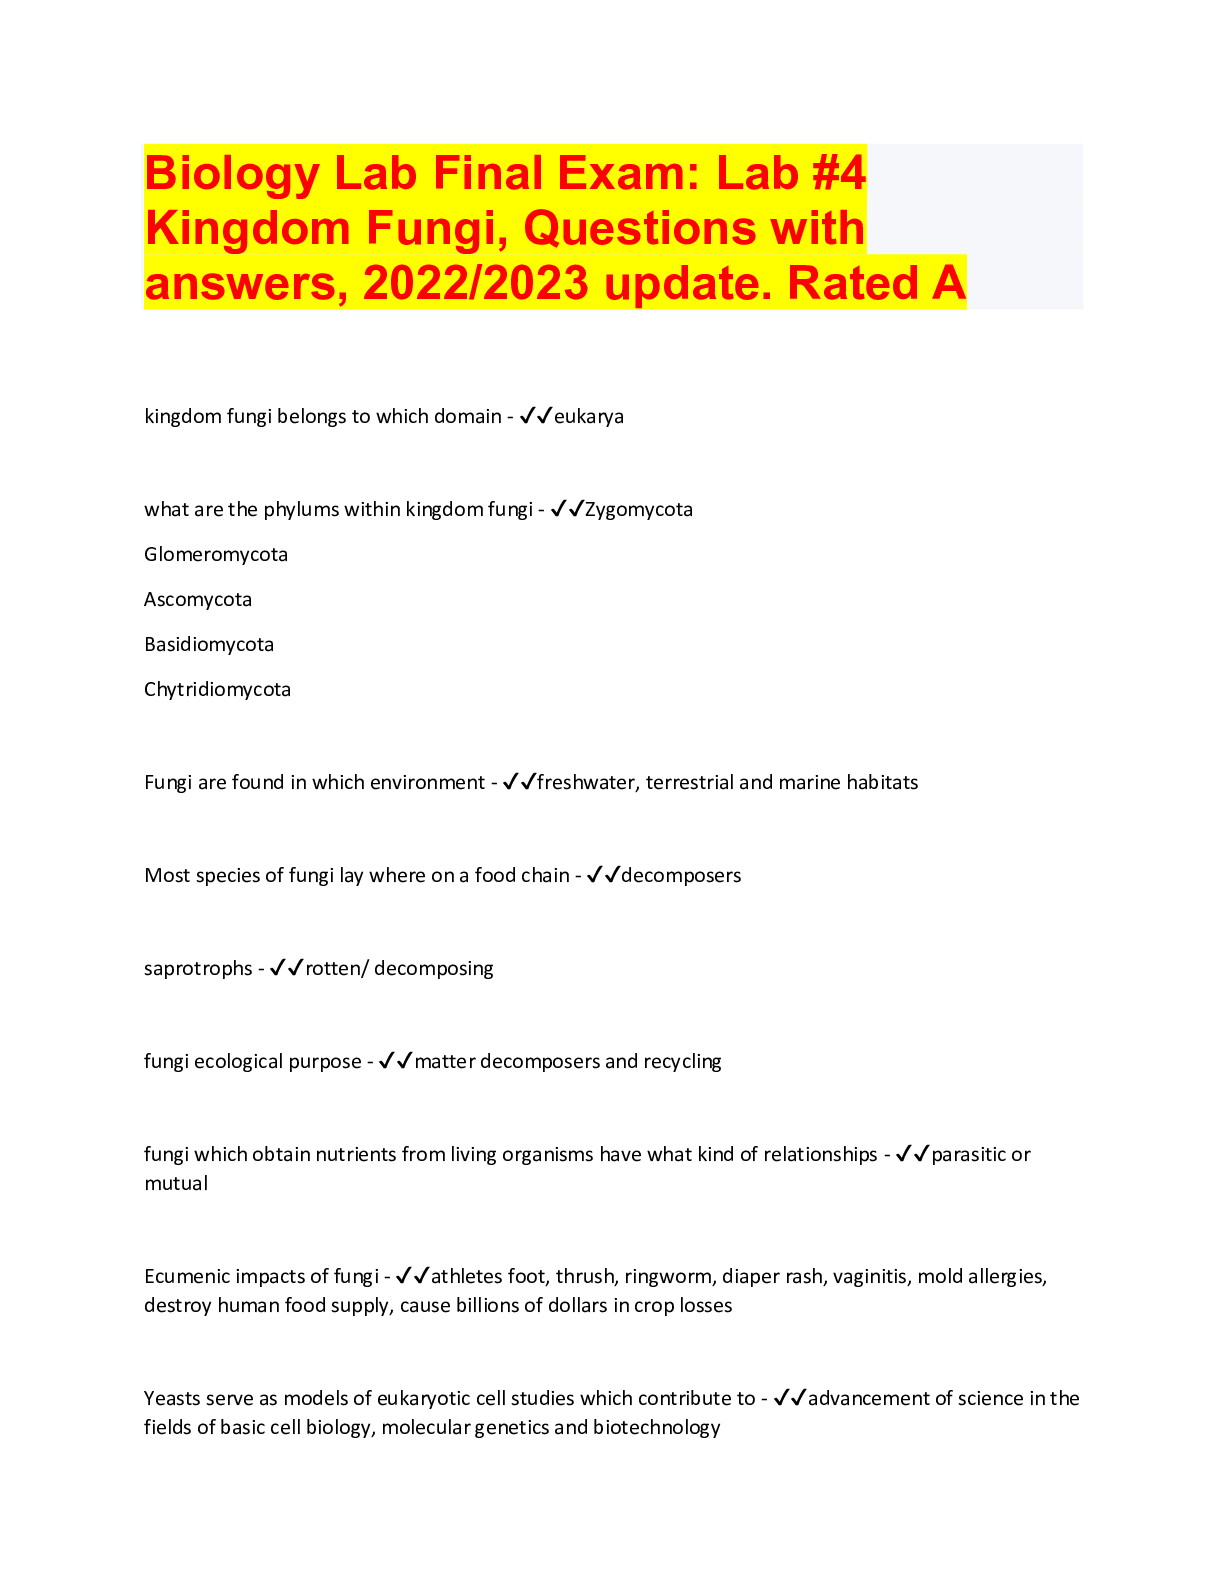 Biology Lab Final Exam Lab 4 Kingdom Fungi, Questions with answers